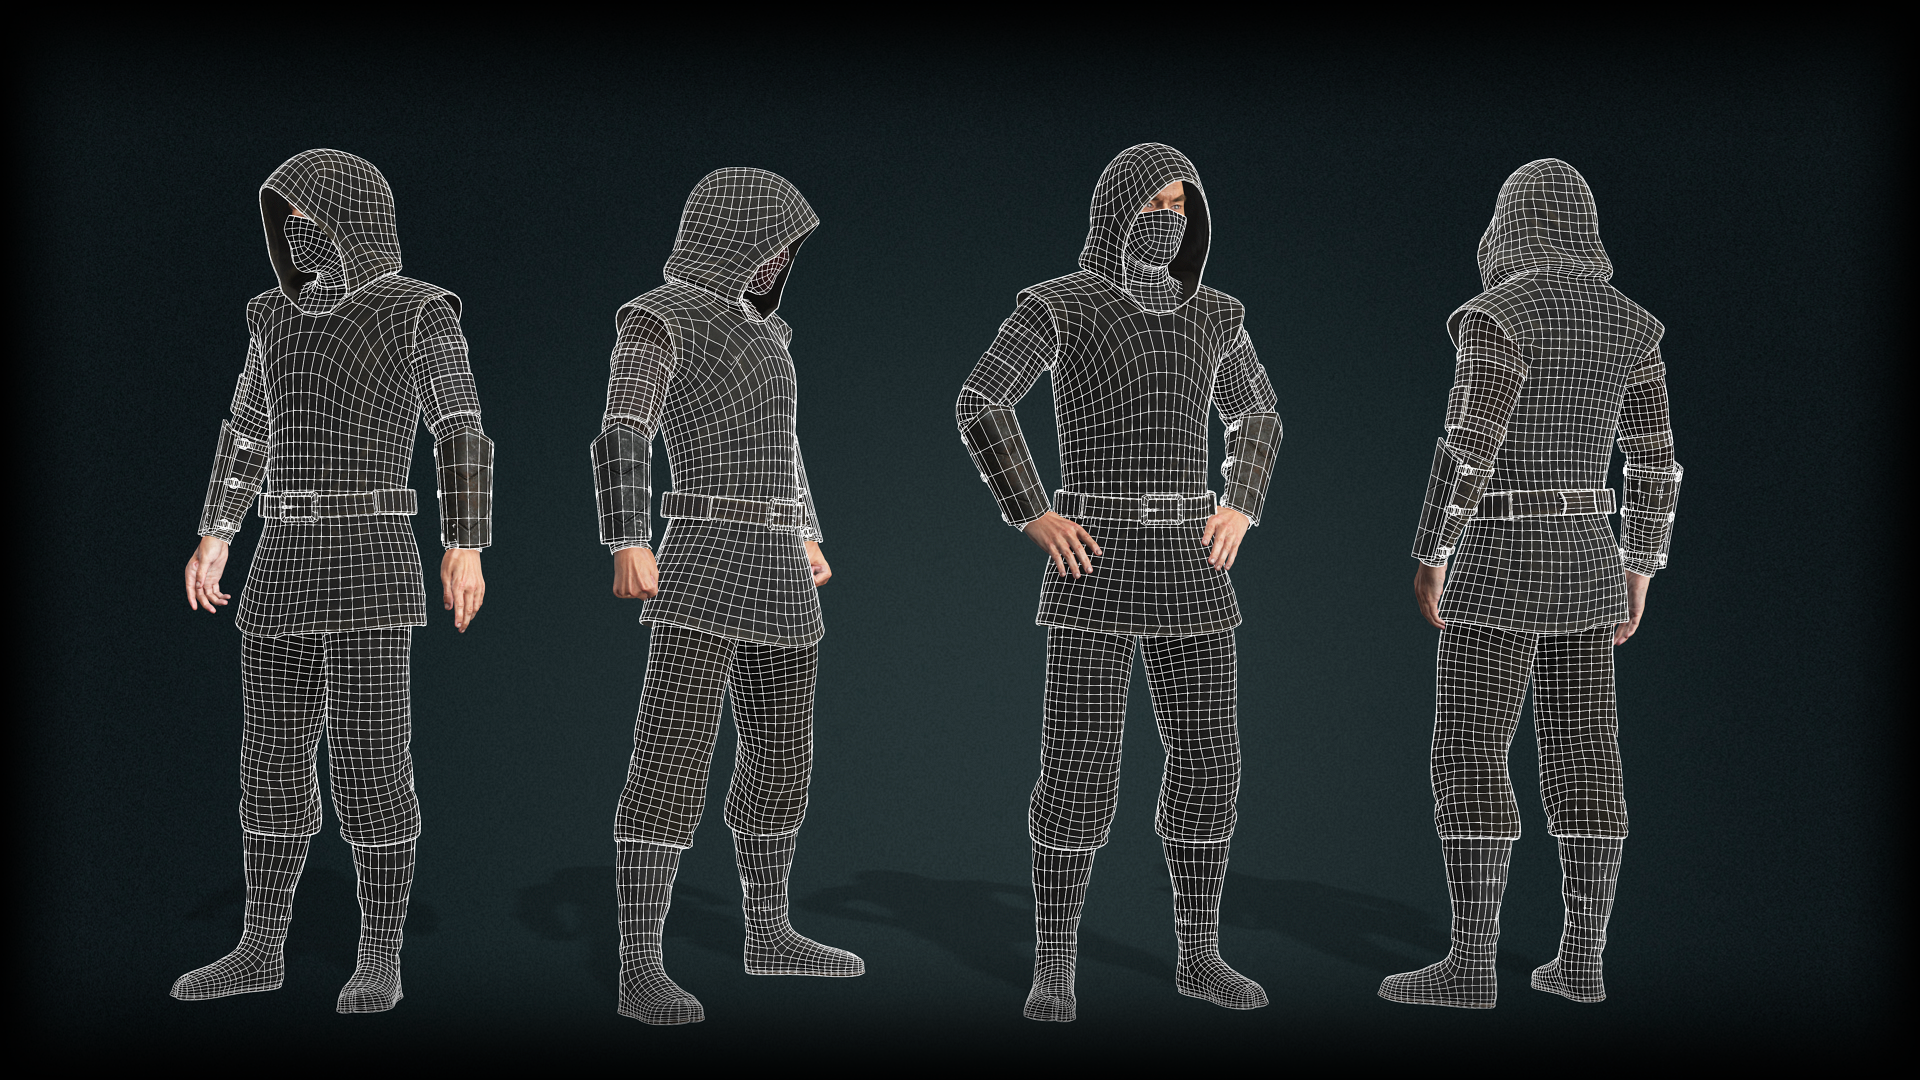 Male Assassin Outfit 1 - Buy Royalty Free 3D model by CG StudioX  (@CG_StudioX) [edcfa71]